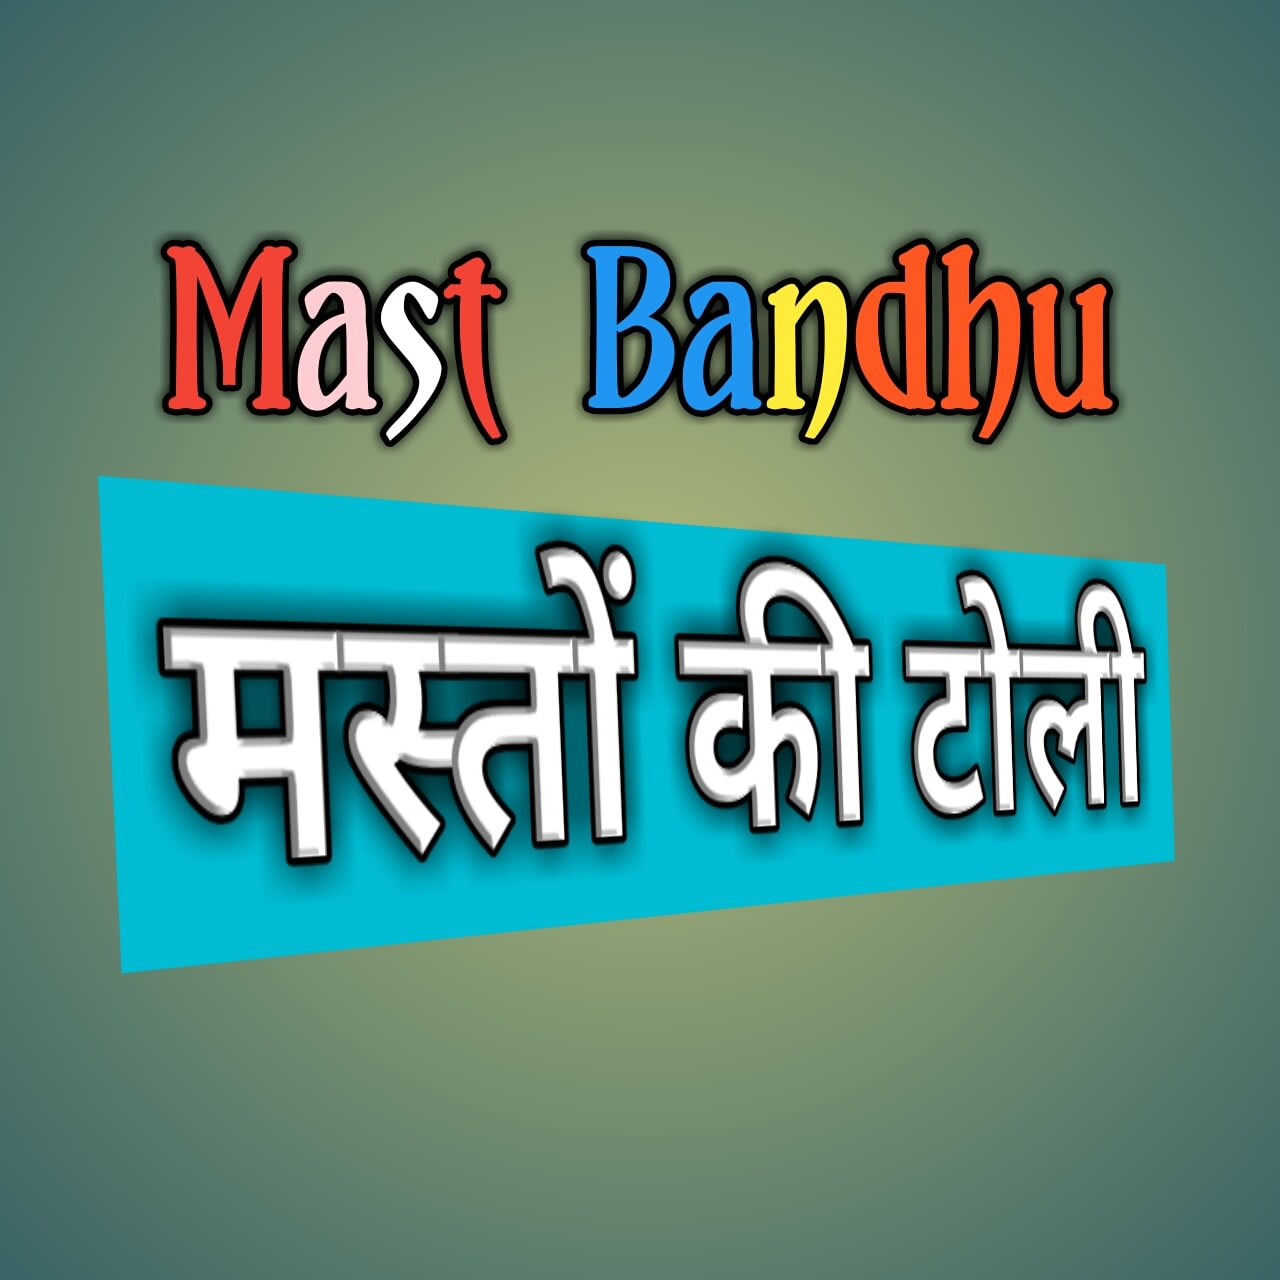 Mast Bandhu